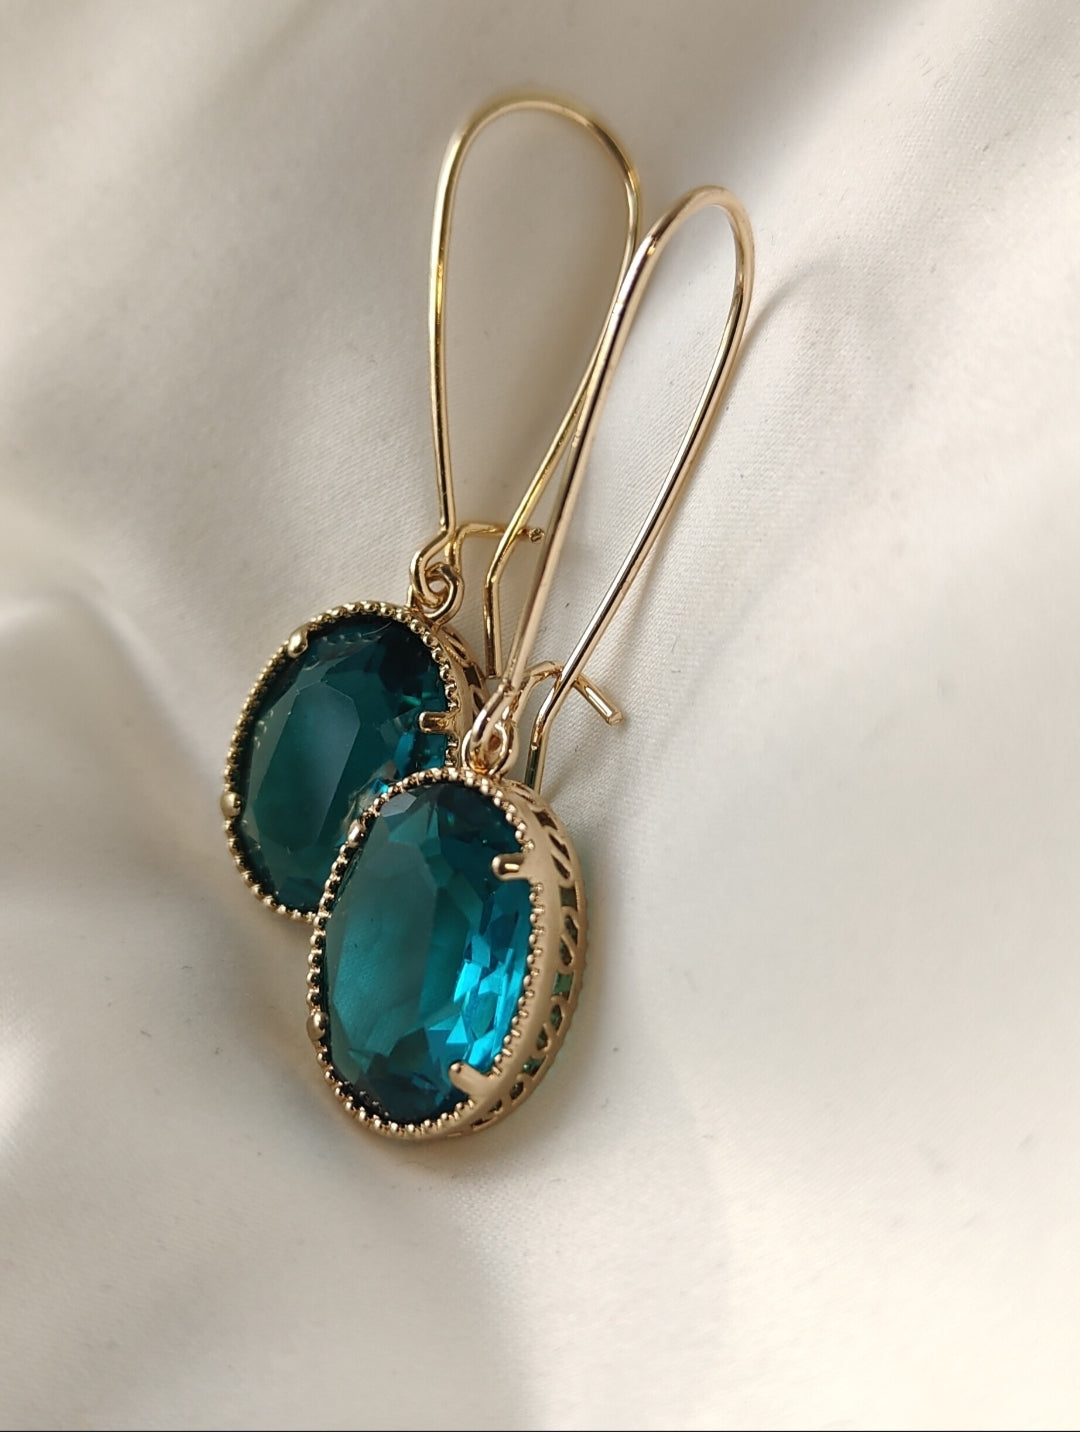 Queen Crystal Earrings - Deep Turquoise